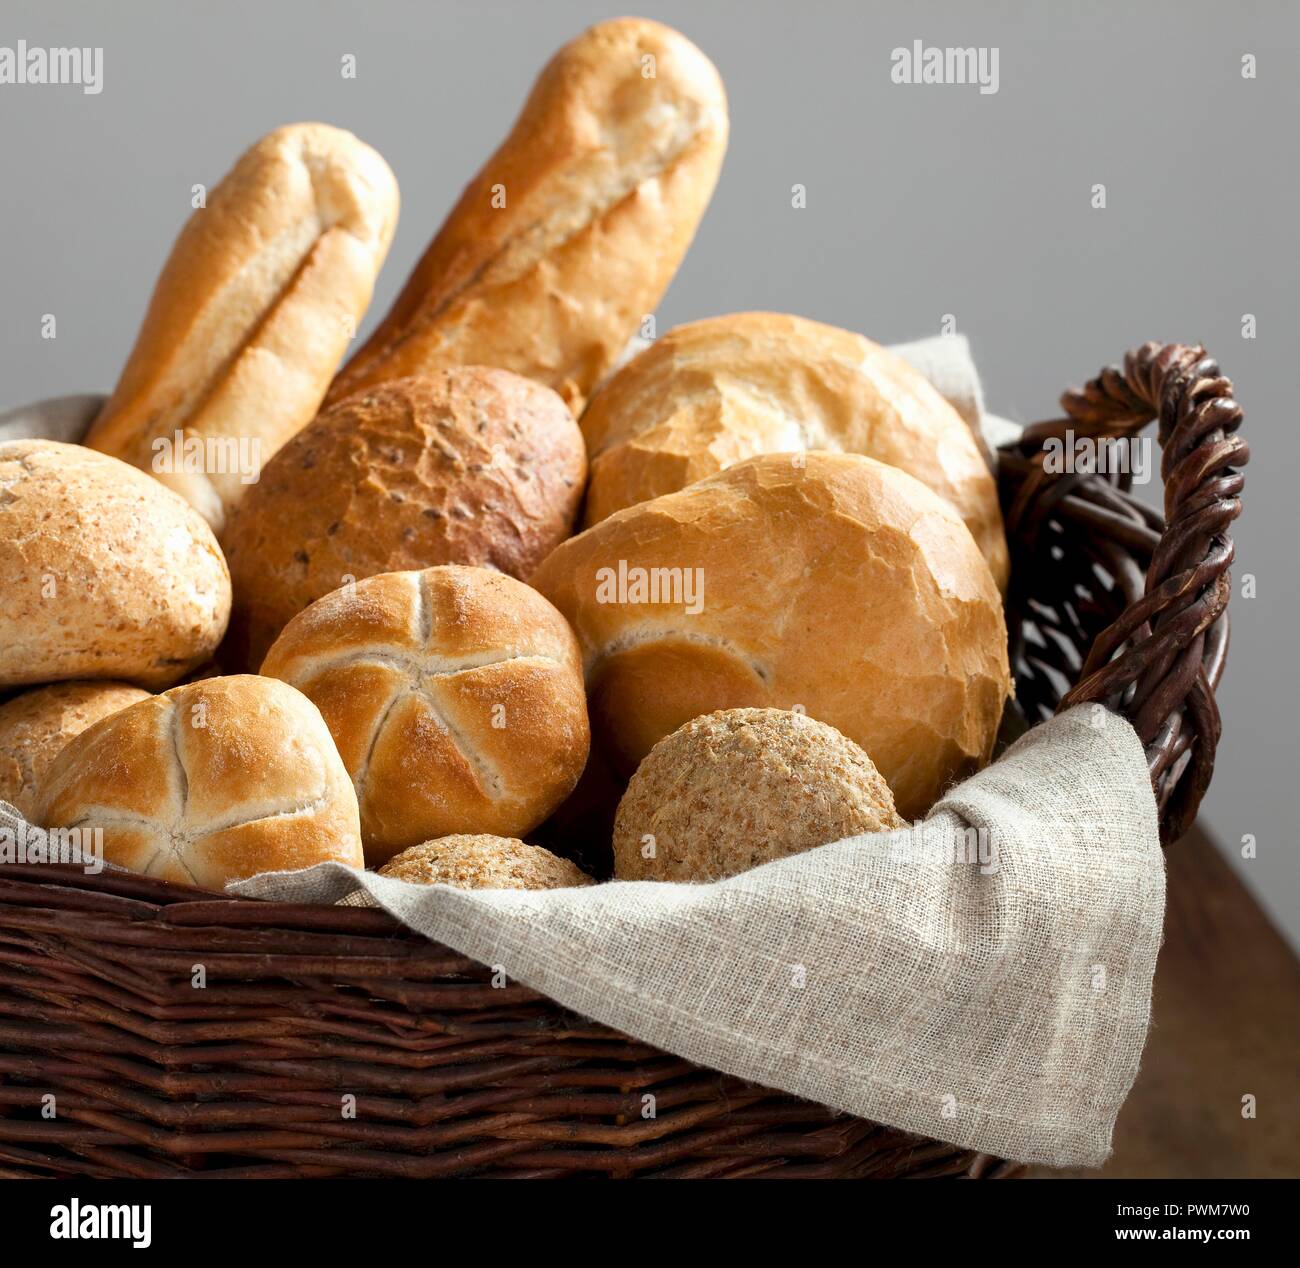 Assorted bread rolls in a bread basket Stock Photo - Alamy